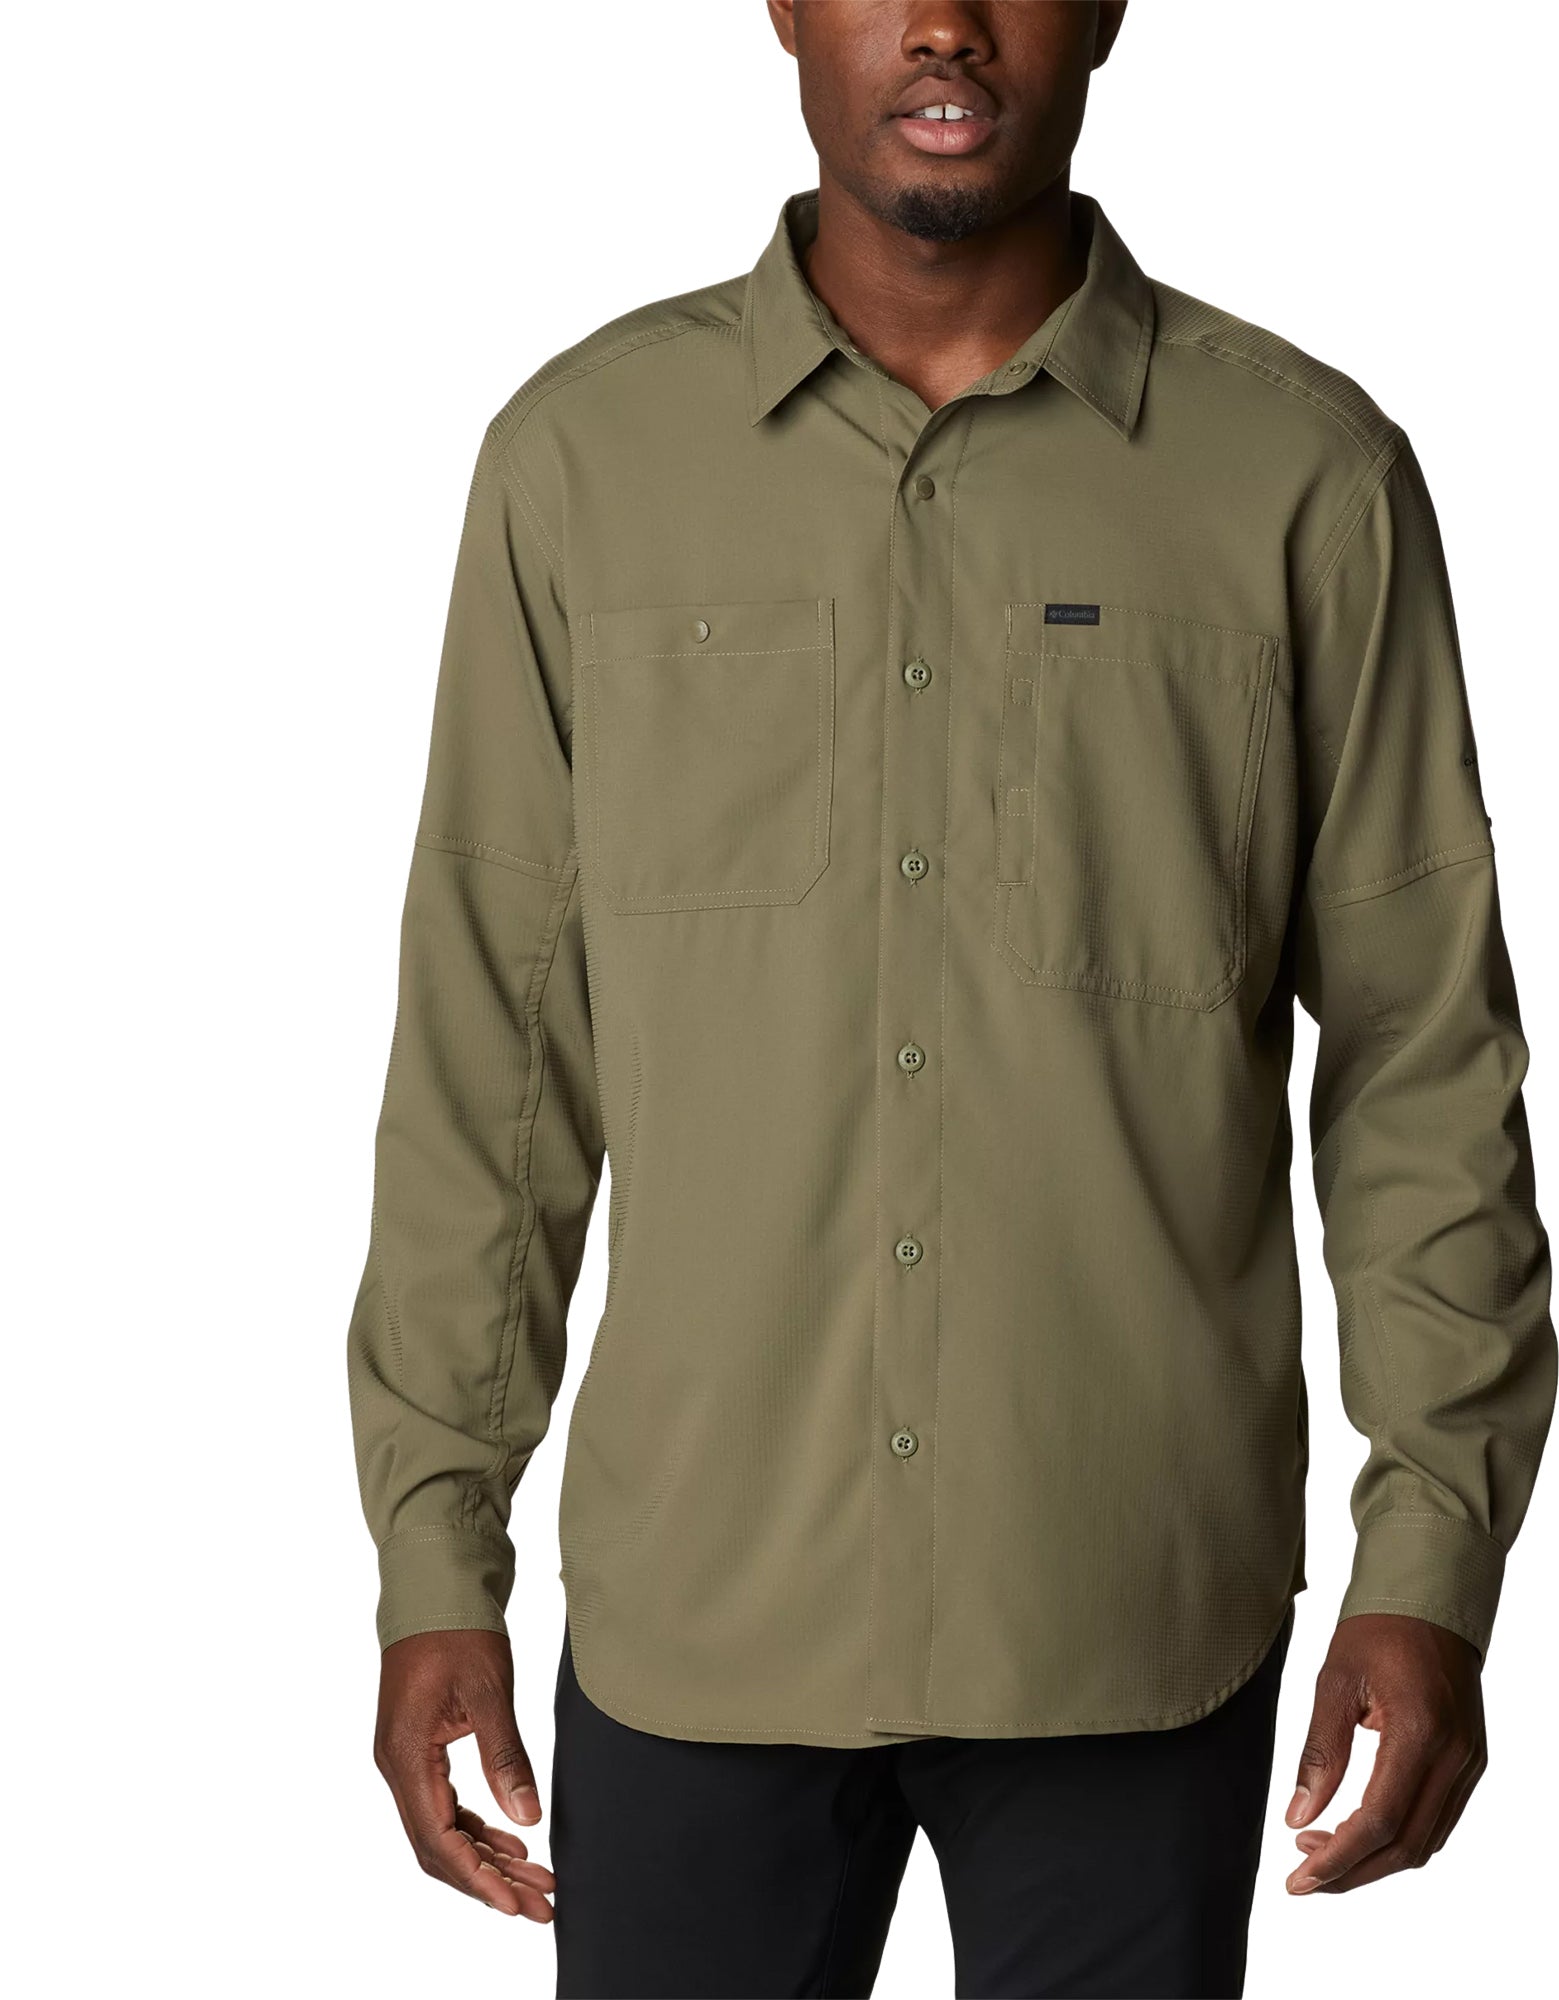 Columbia Silver Ridge Shirt